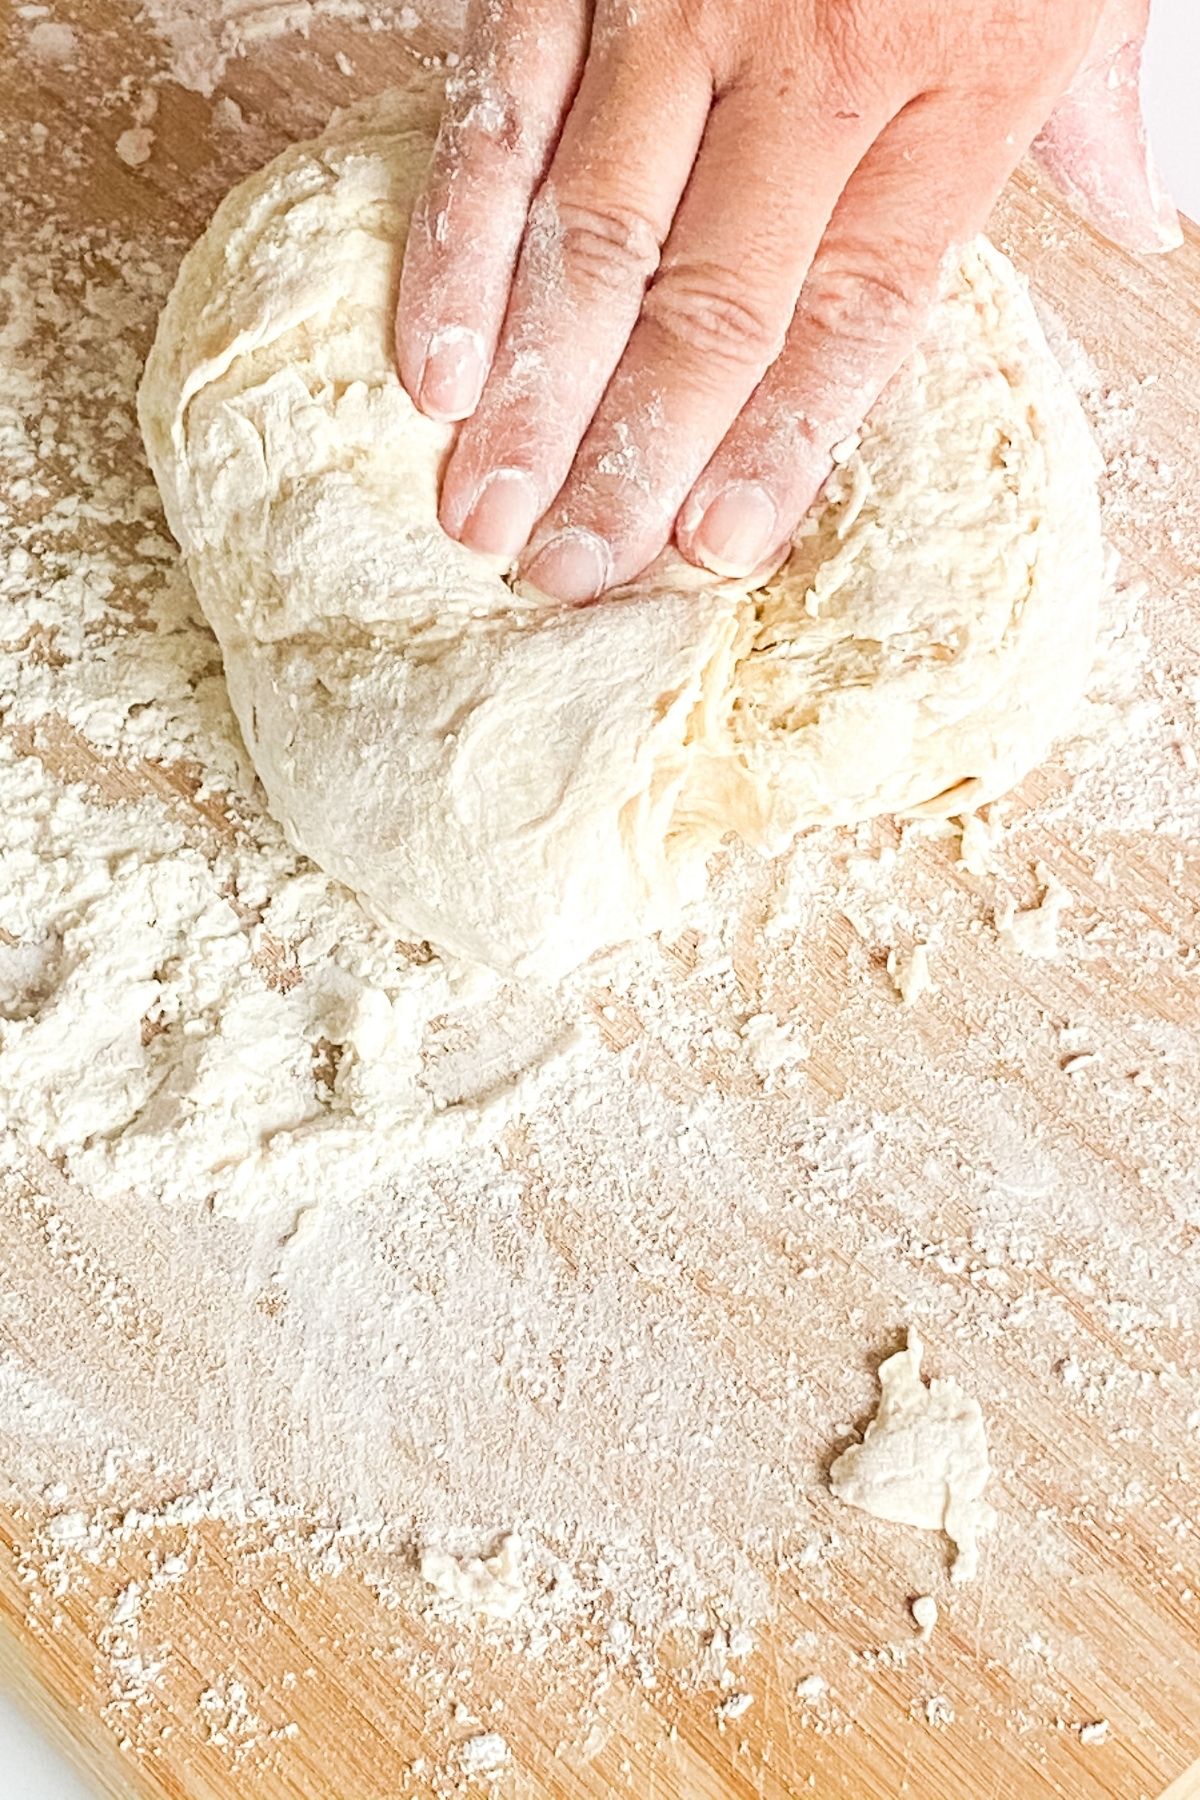 Kneading bagel dough